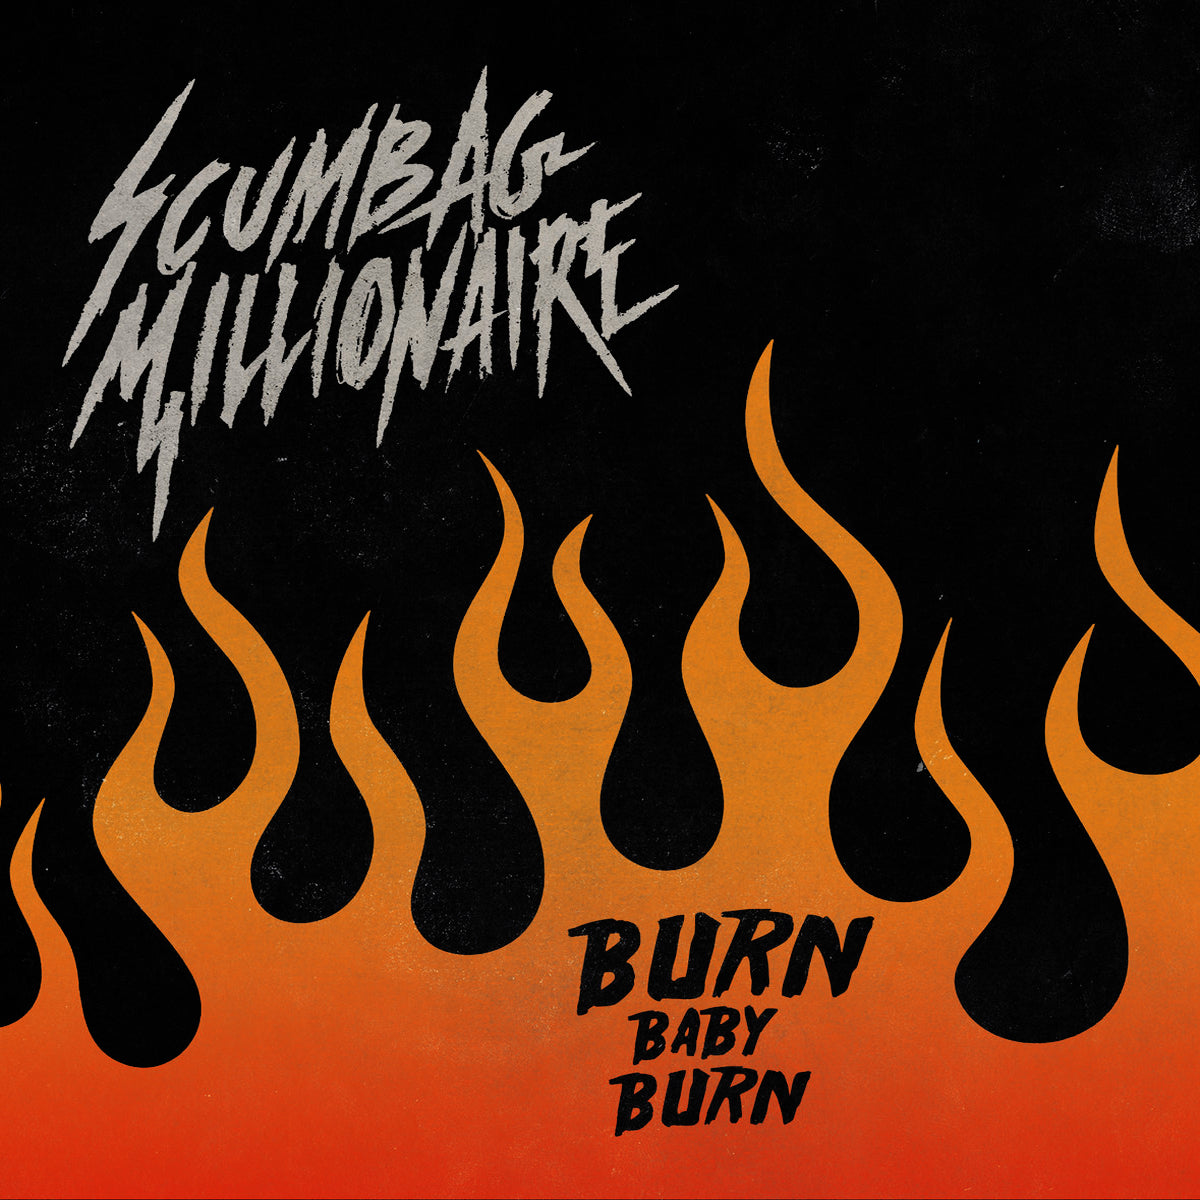 Scumbag Millionaire- Burn Baby Burn 7” ~ZEKE!